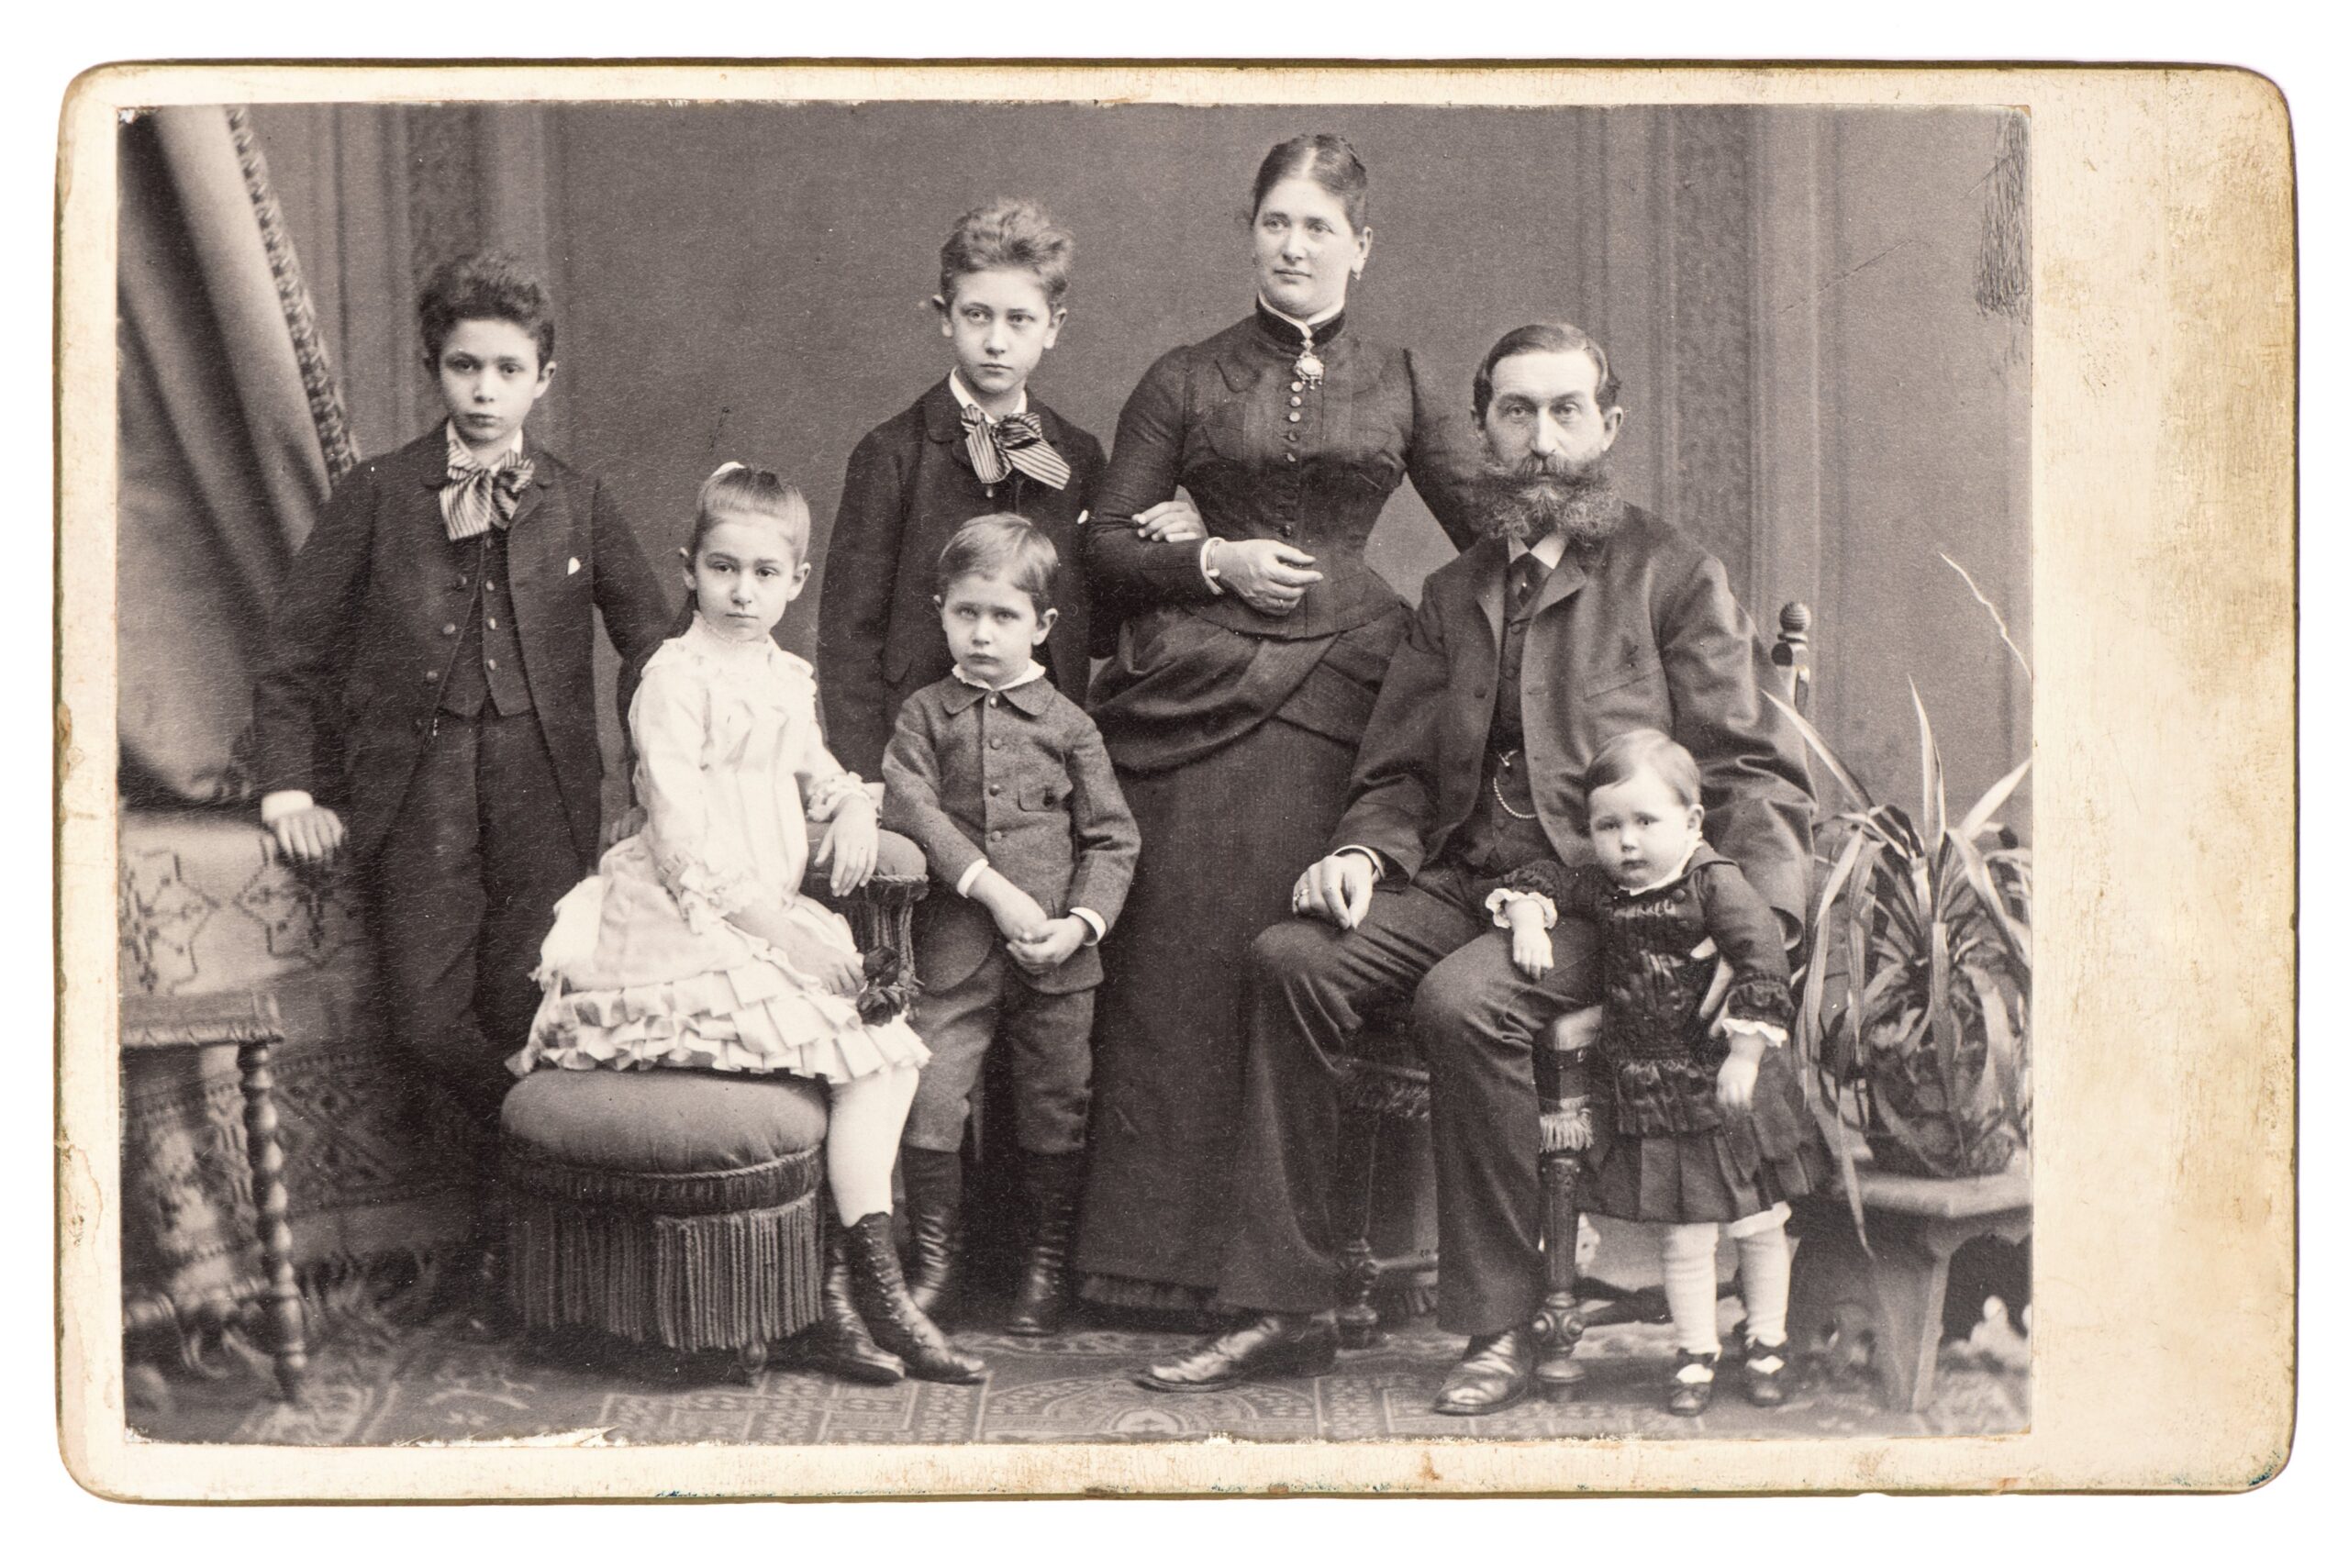 Formal family photo taken in Vienna, Austria,1885